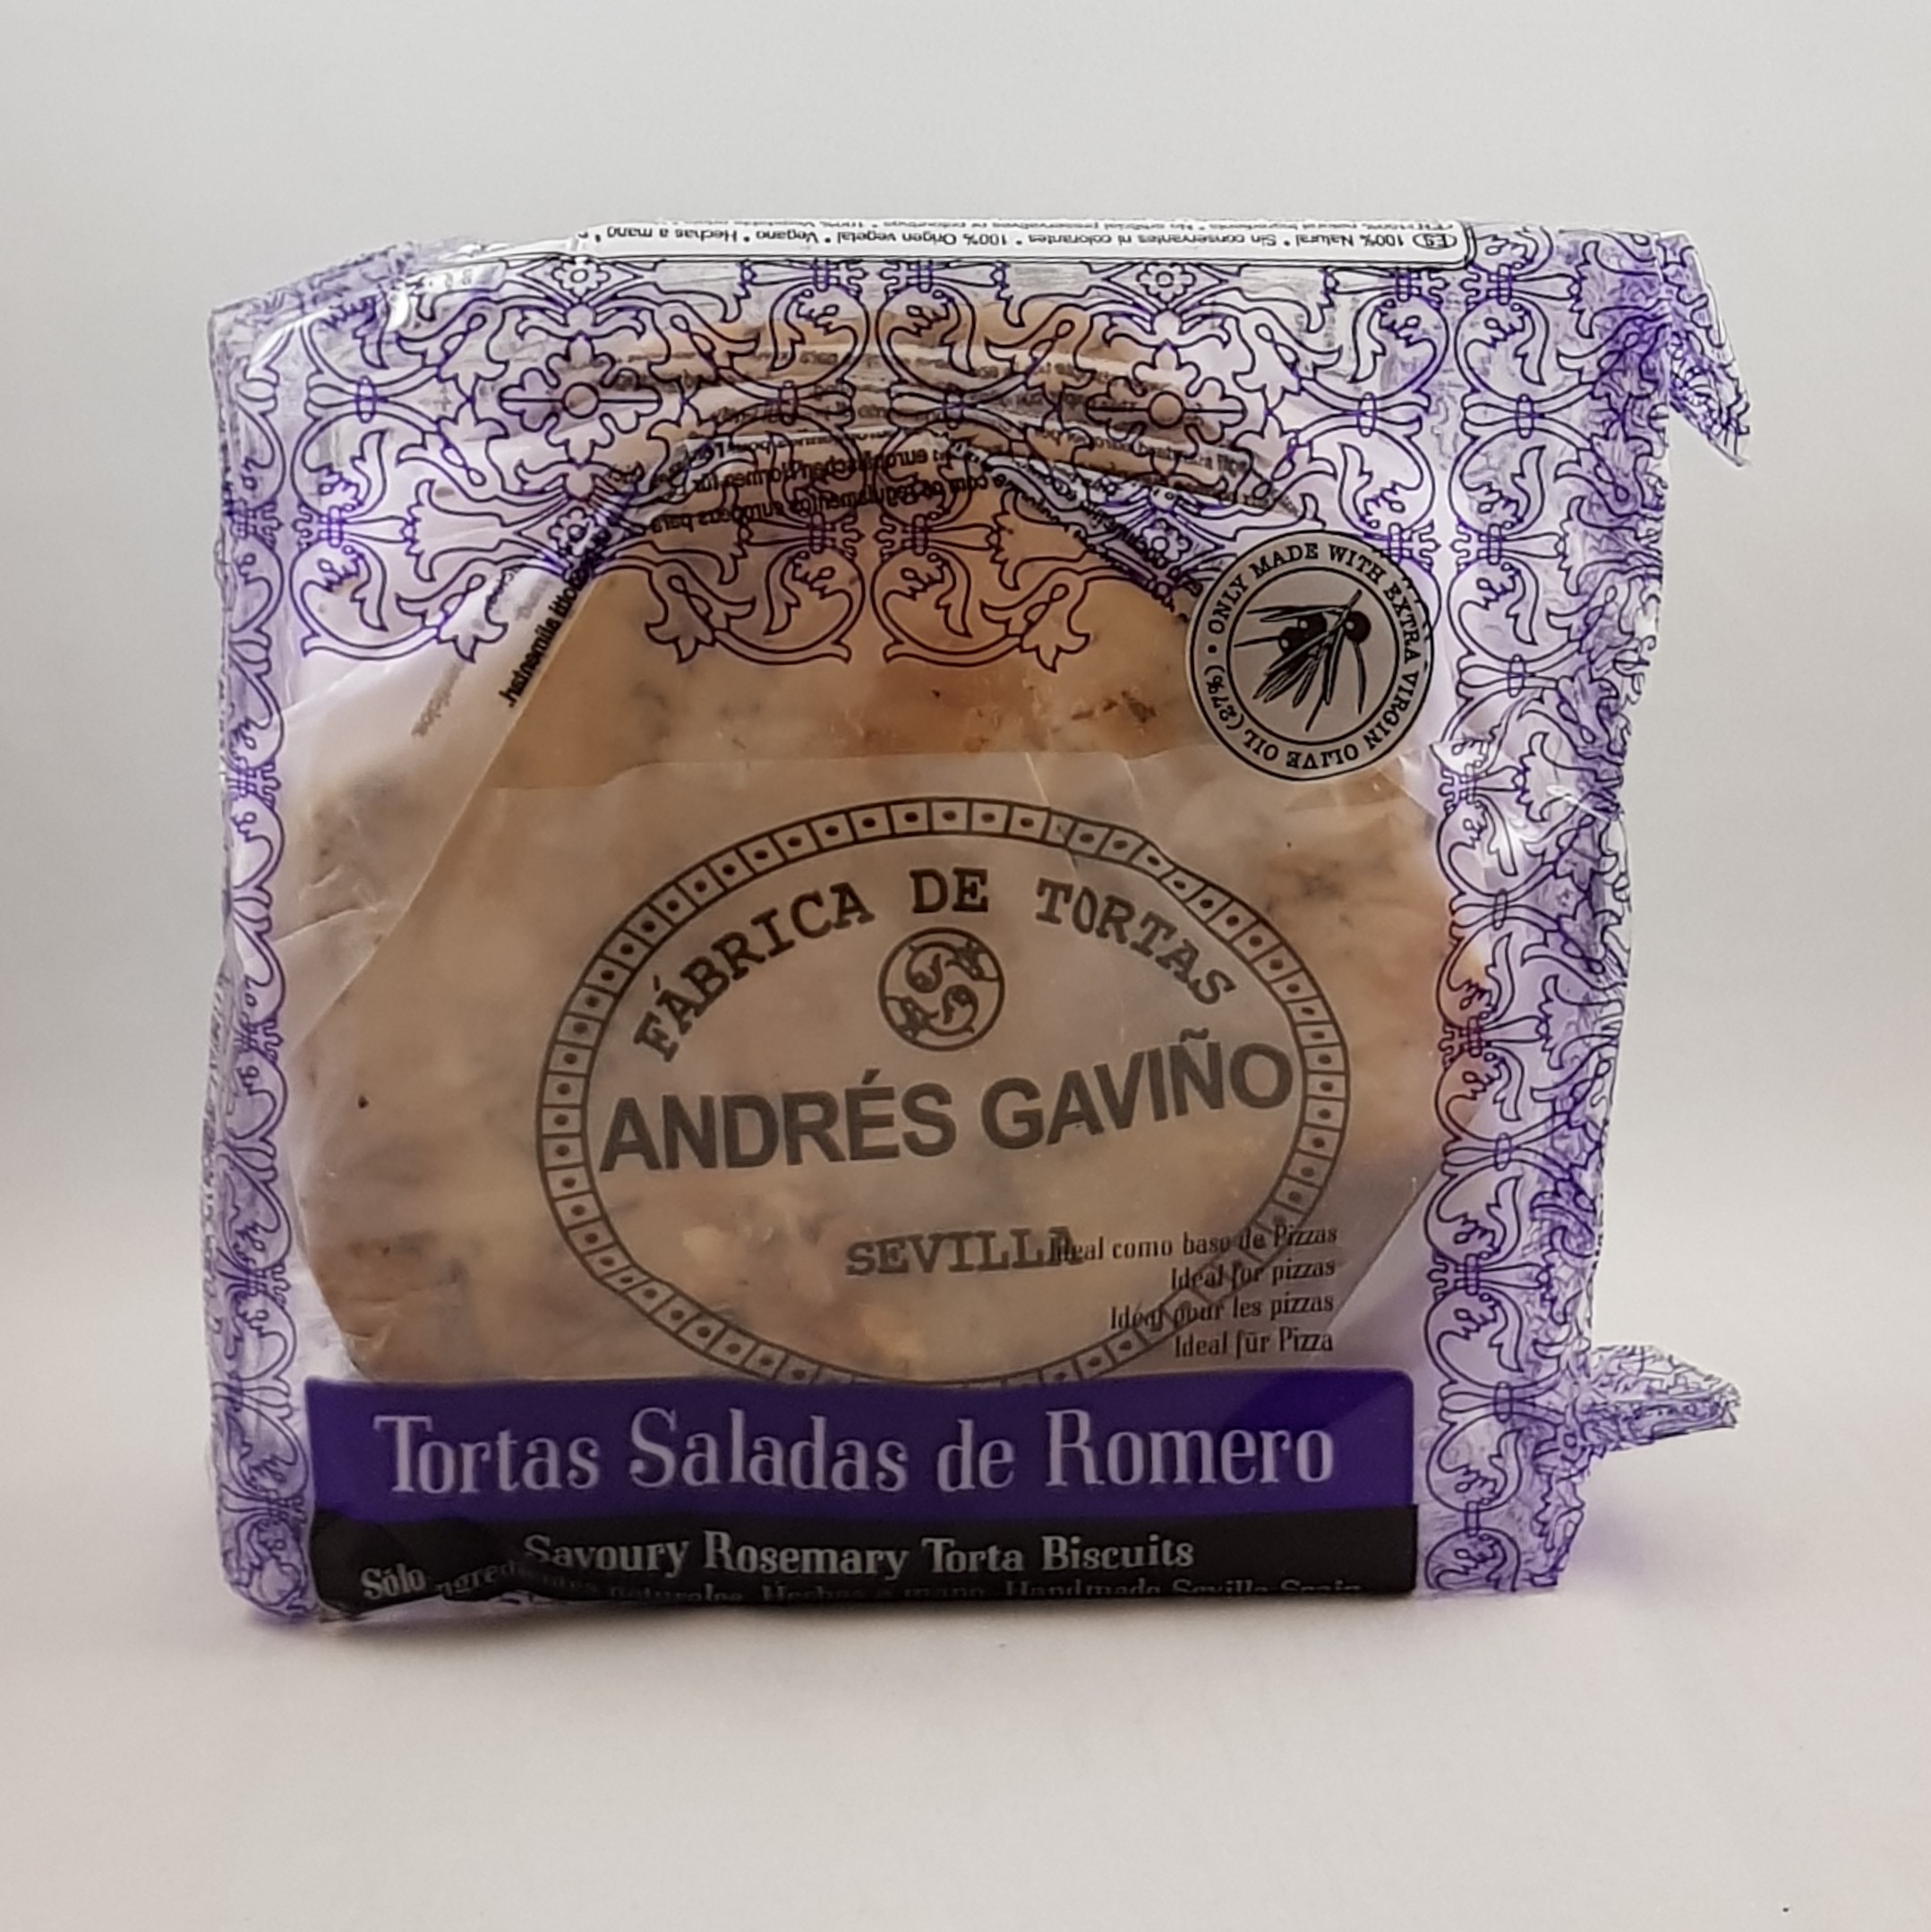 Andres Gavino Tortas Saladas de Romero